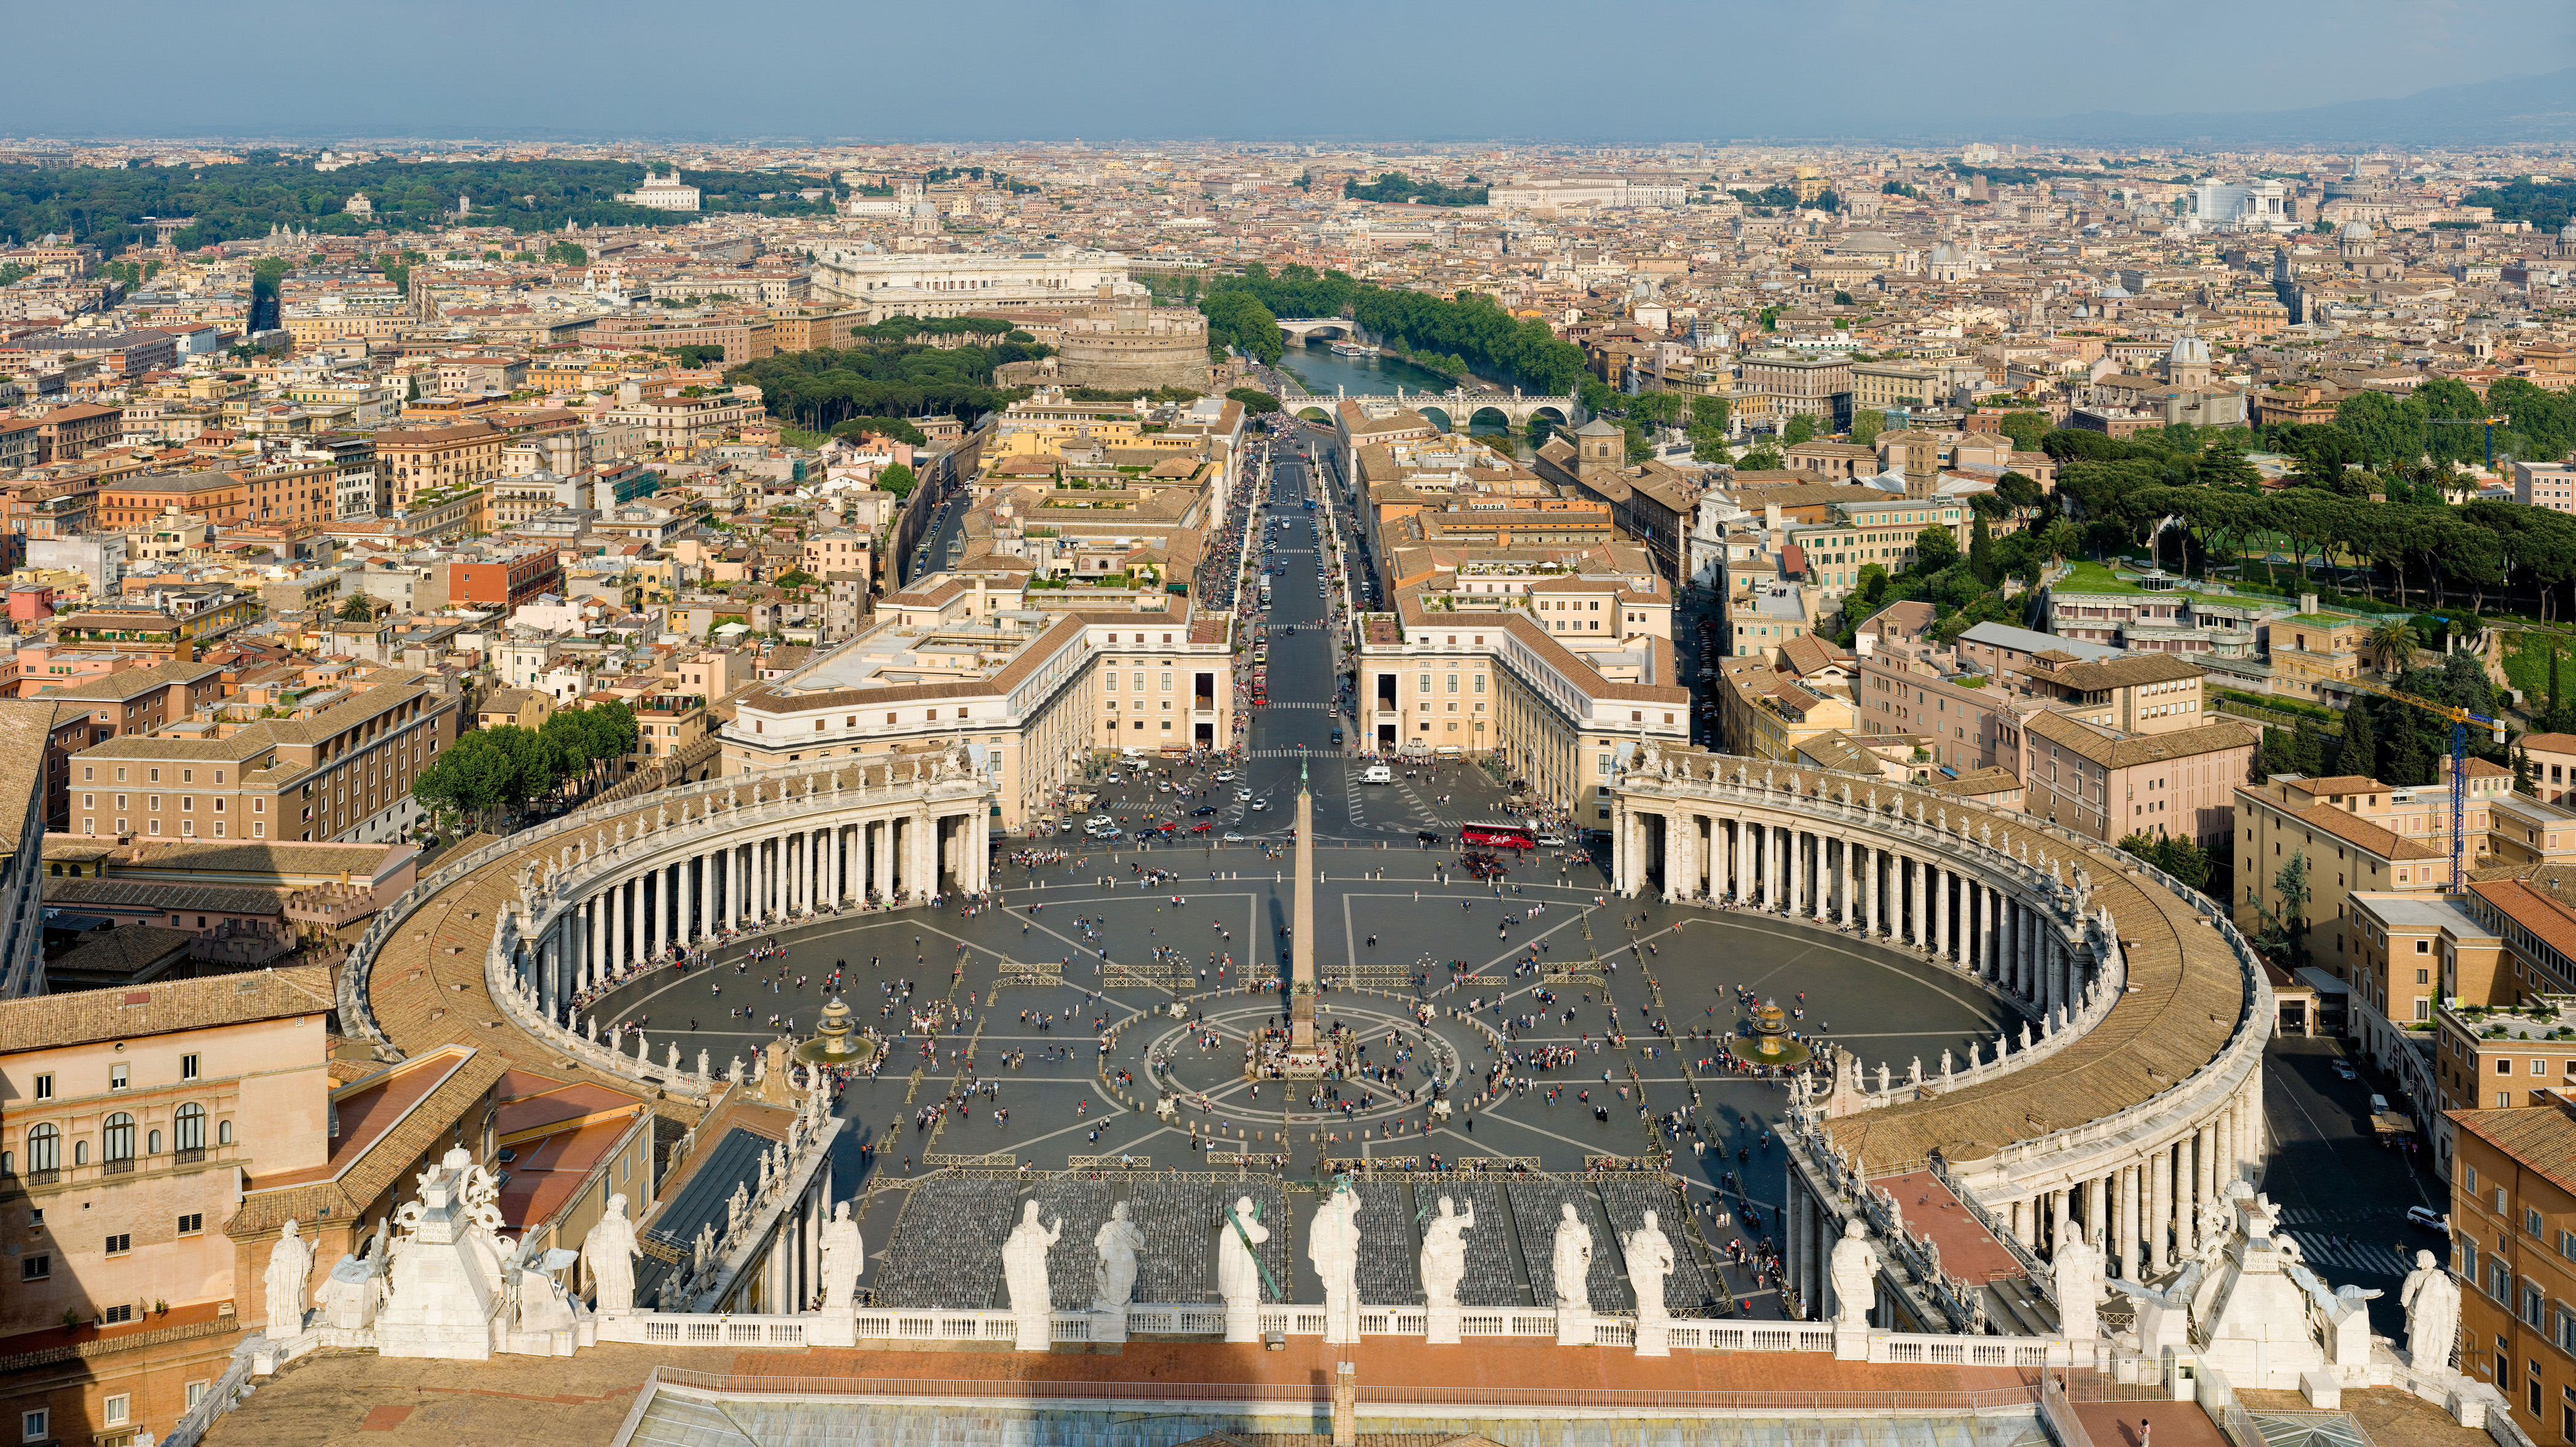 Top of St Peter's Basilica